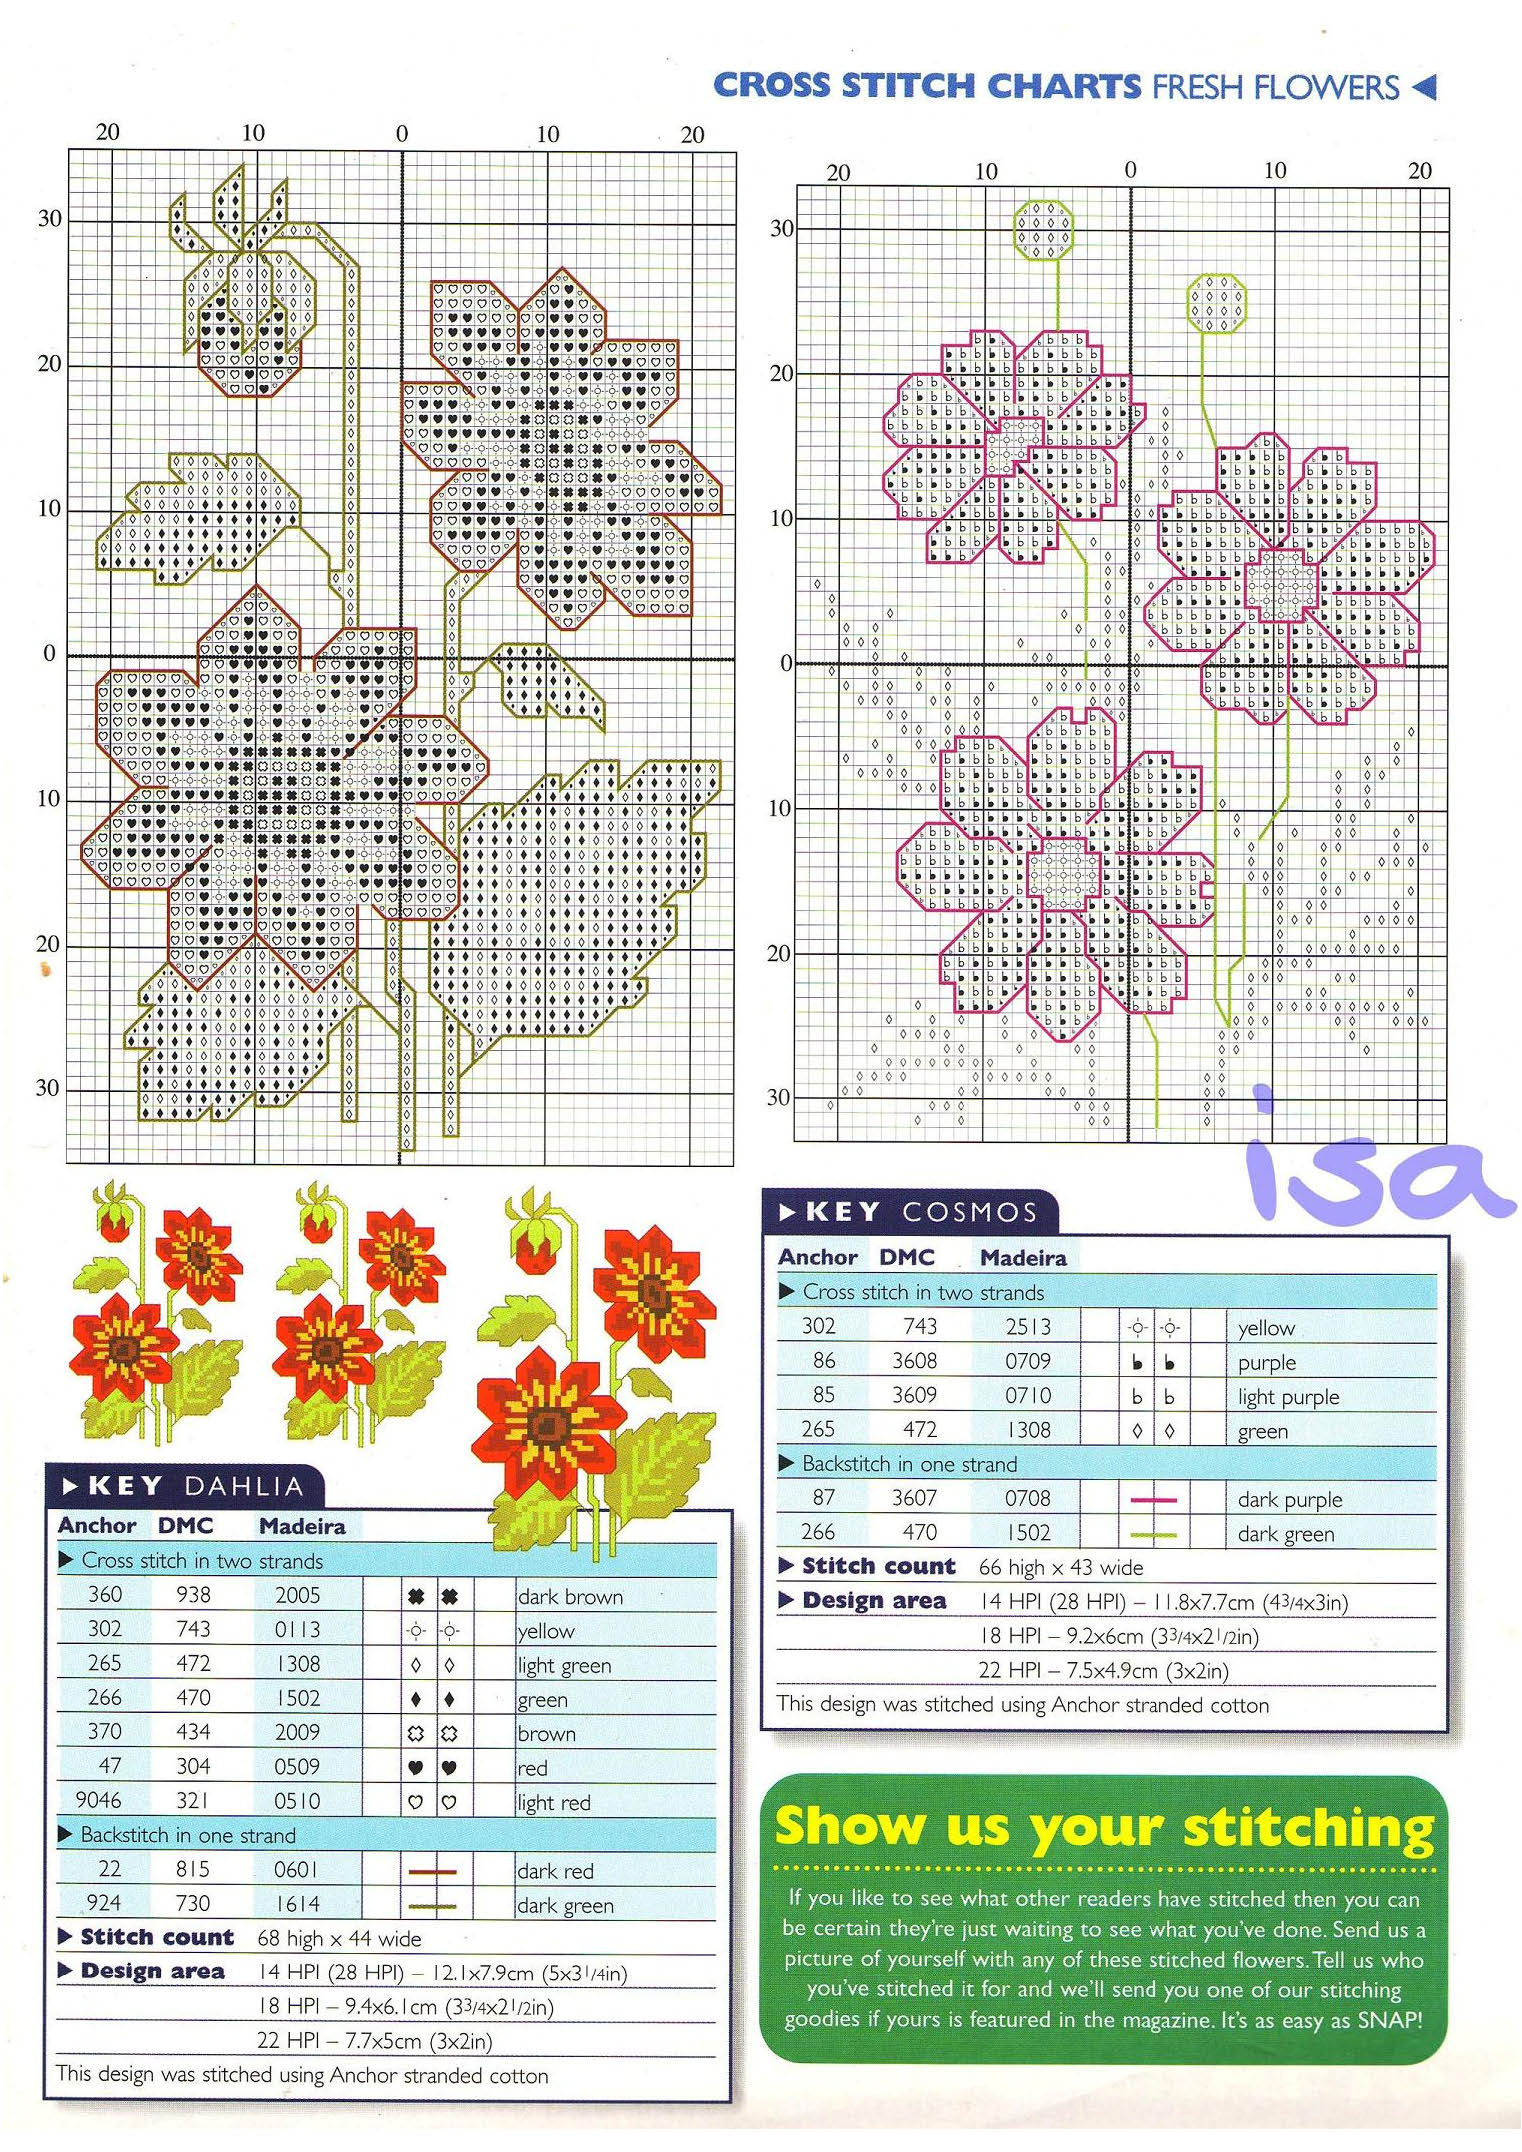 Dahlia and Cosmos flowers cross stitch pattern